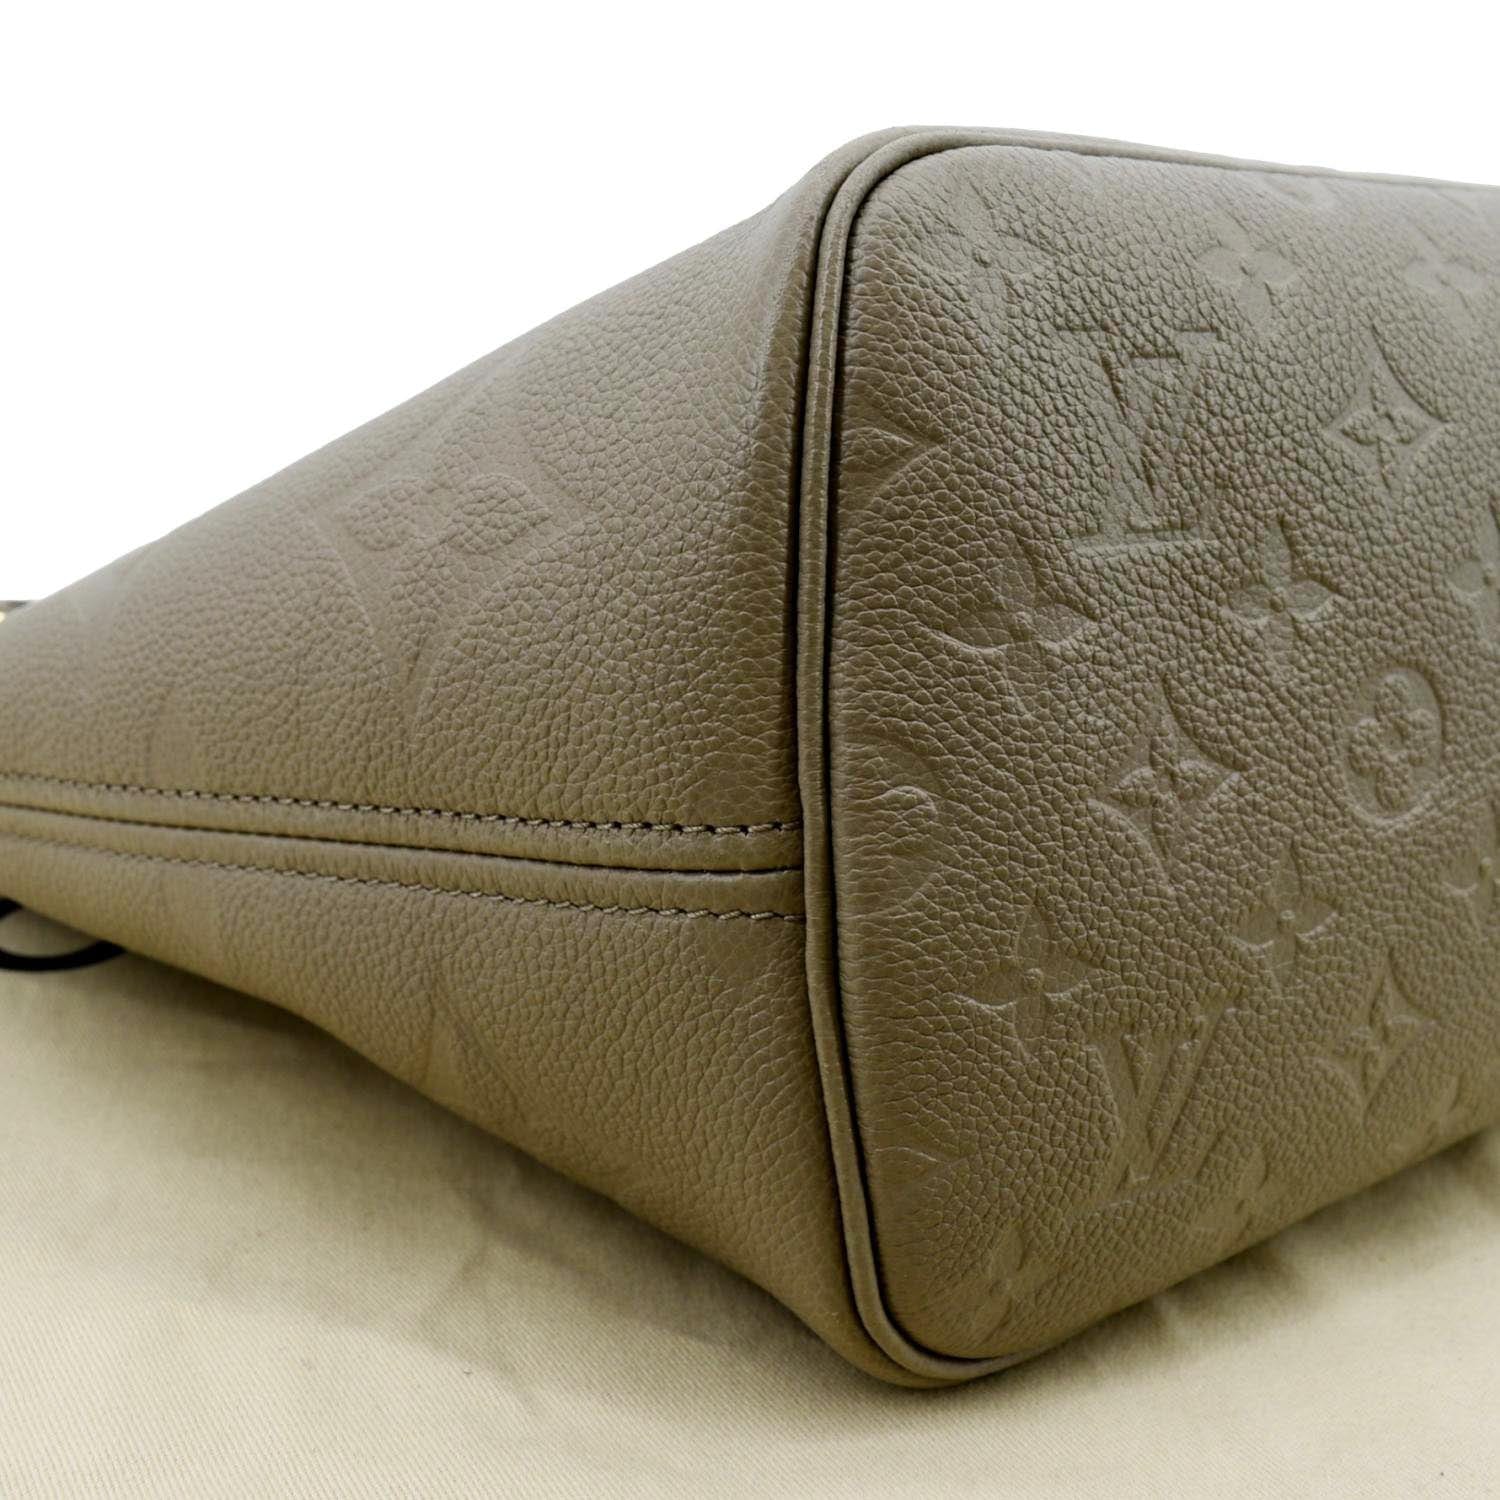 Louis Vuitton - Neverfull mm Tote Bag - Dune - Monogram Leather - Women - Luxury